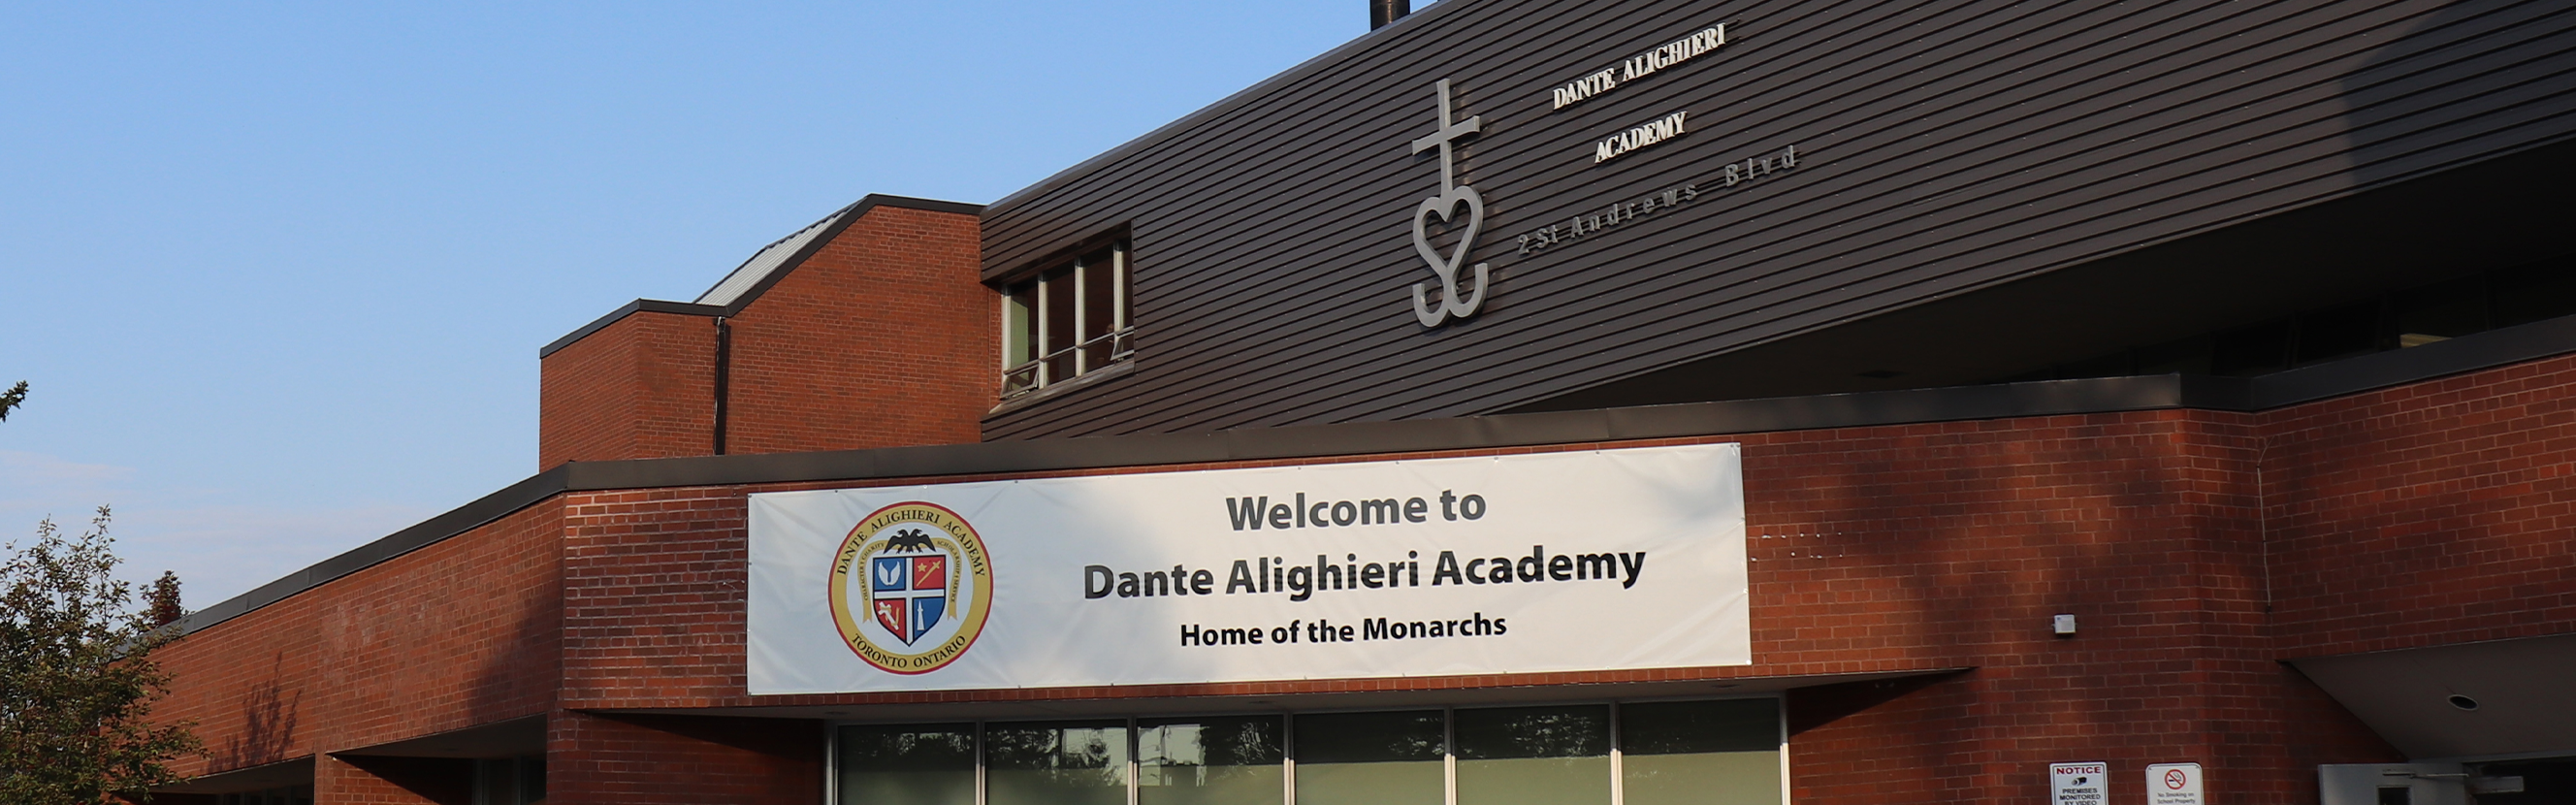 Front of the Dante Alighieri Academy Catholic Secondary School building